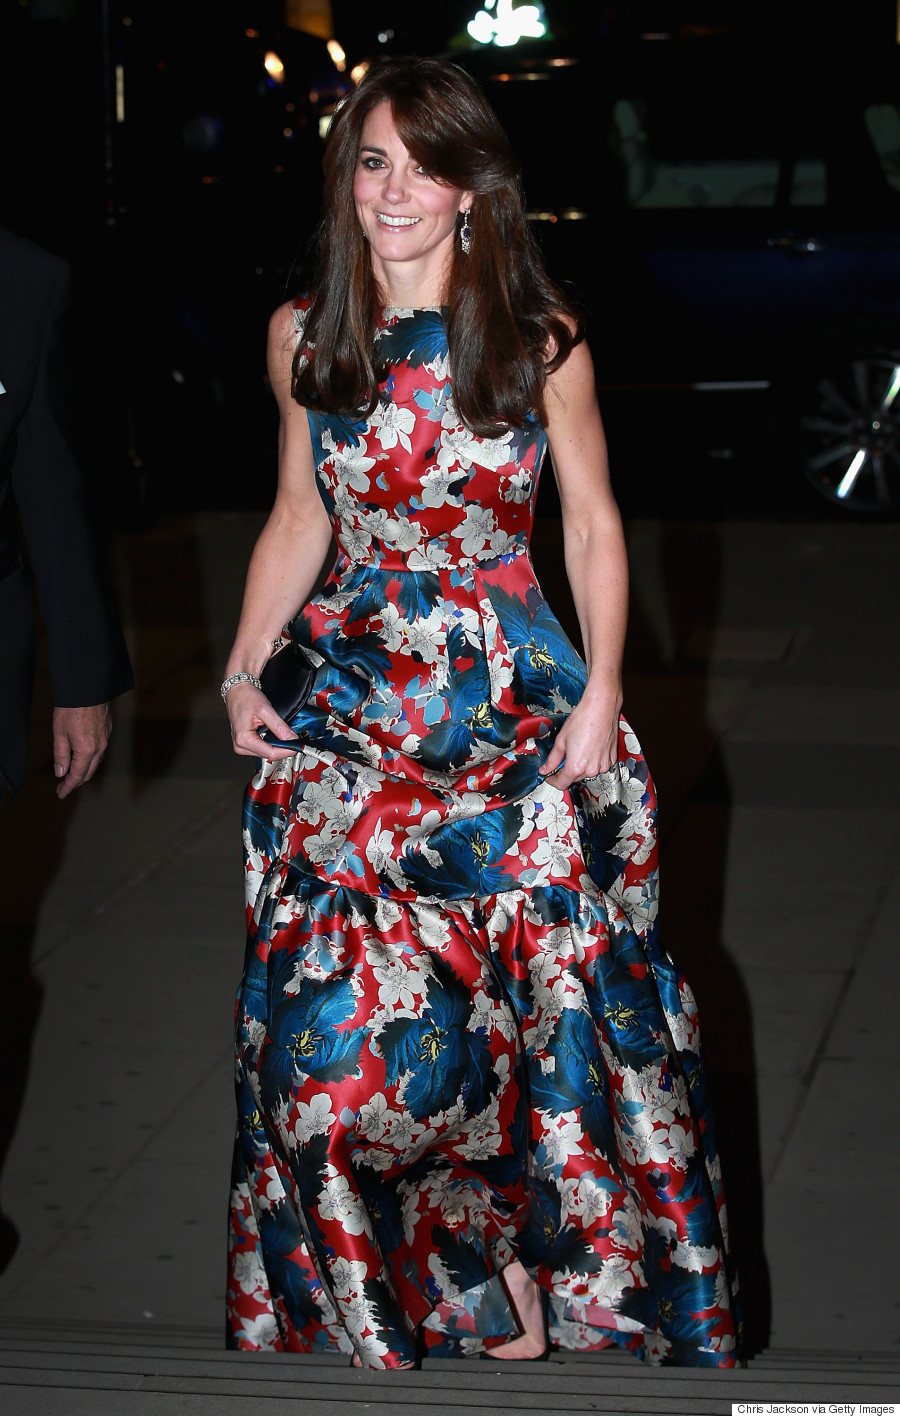 Kate Middleton Steps Out In Floral Erdem Gown For Black Tie Event